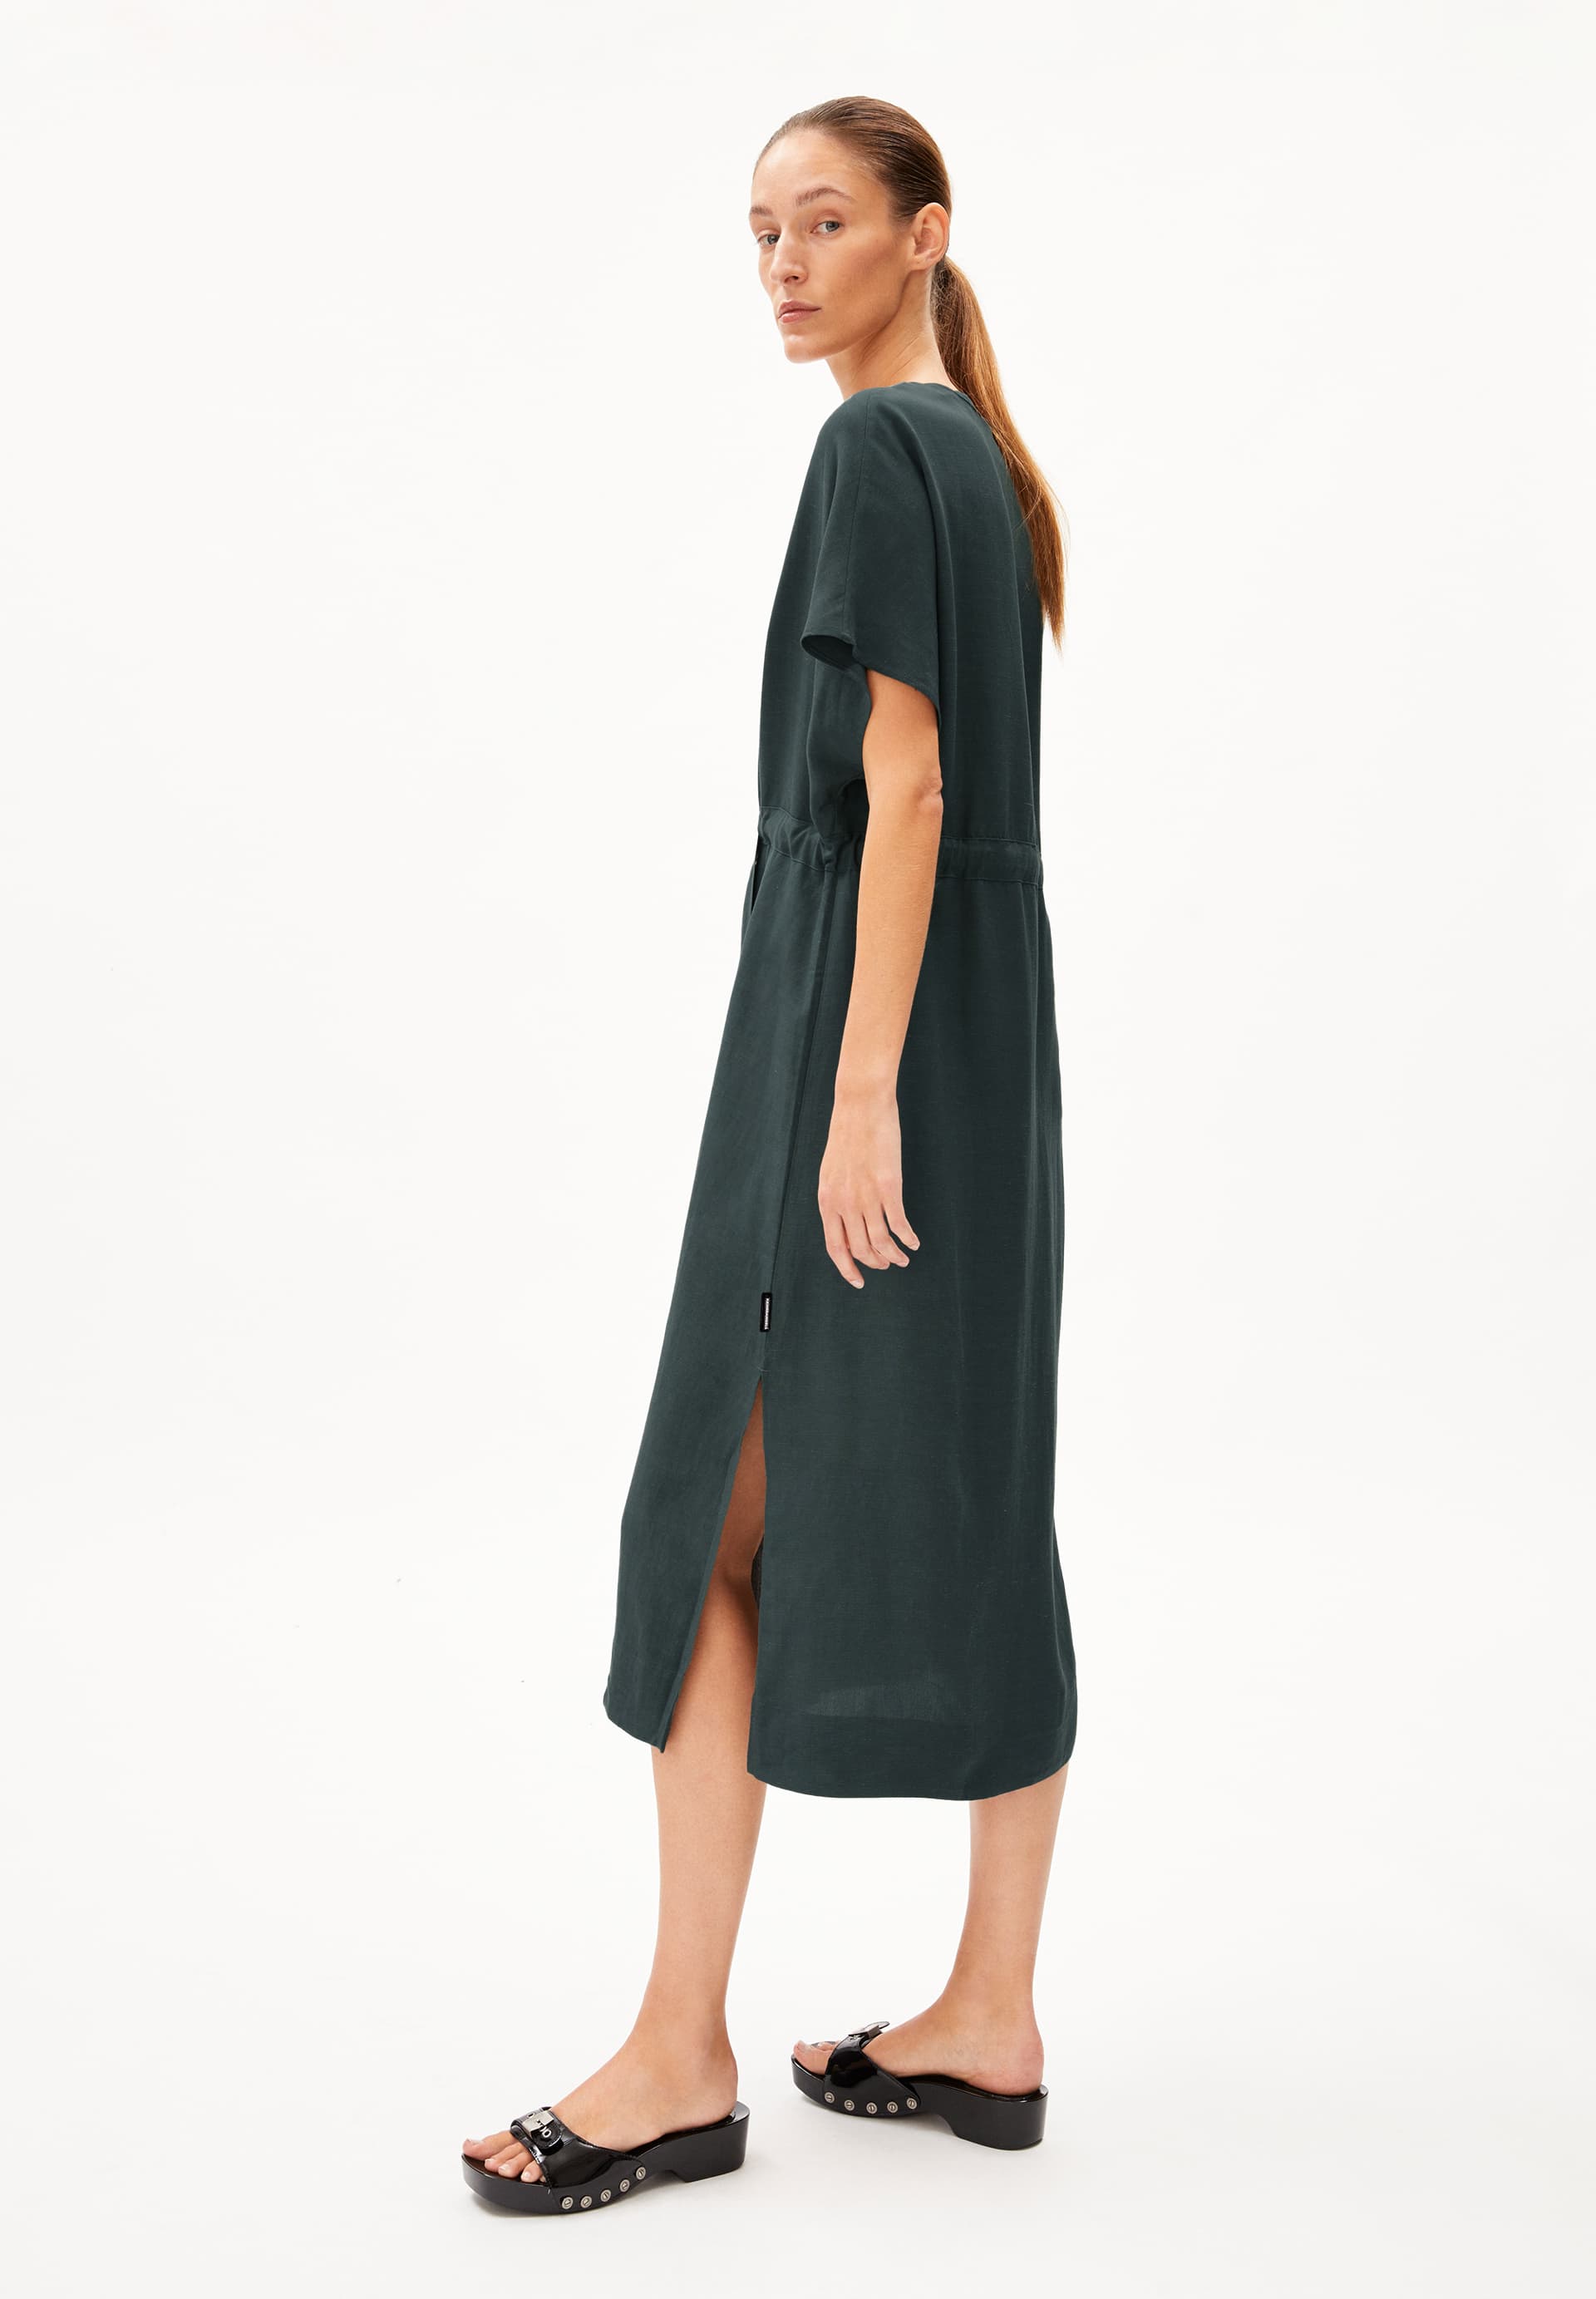 MAAHALIANA LINO Woven Dress Relaxed Fit made of Linen-Mix